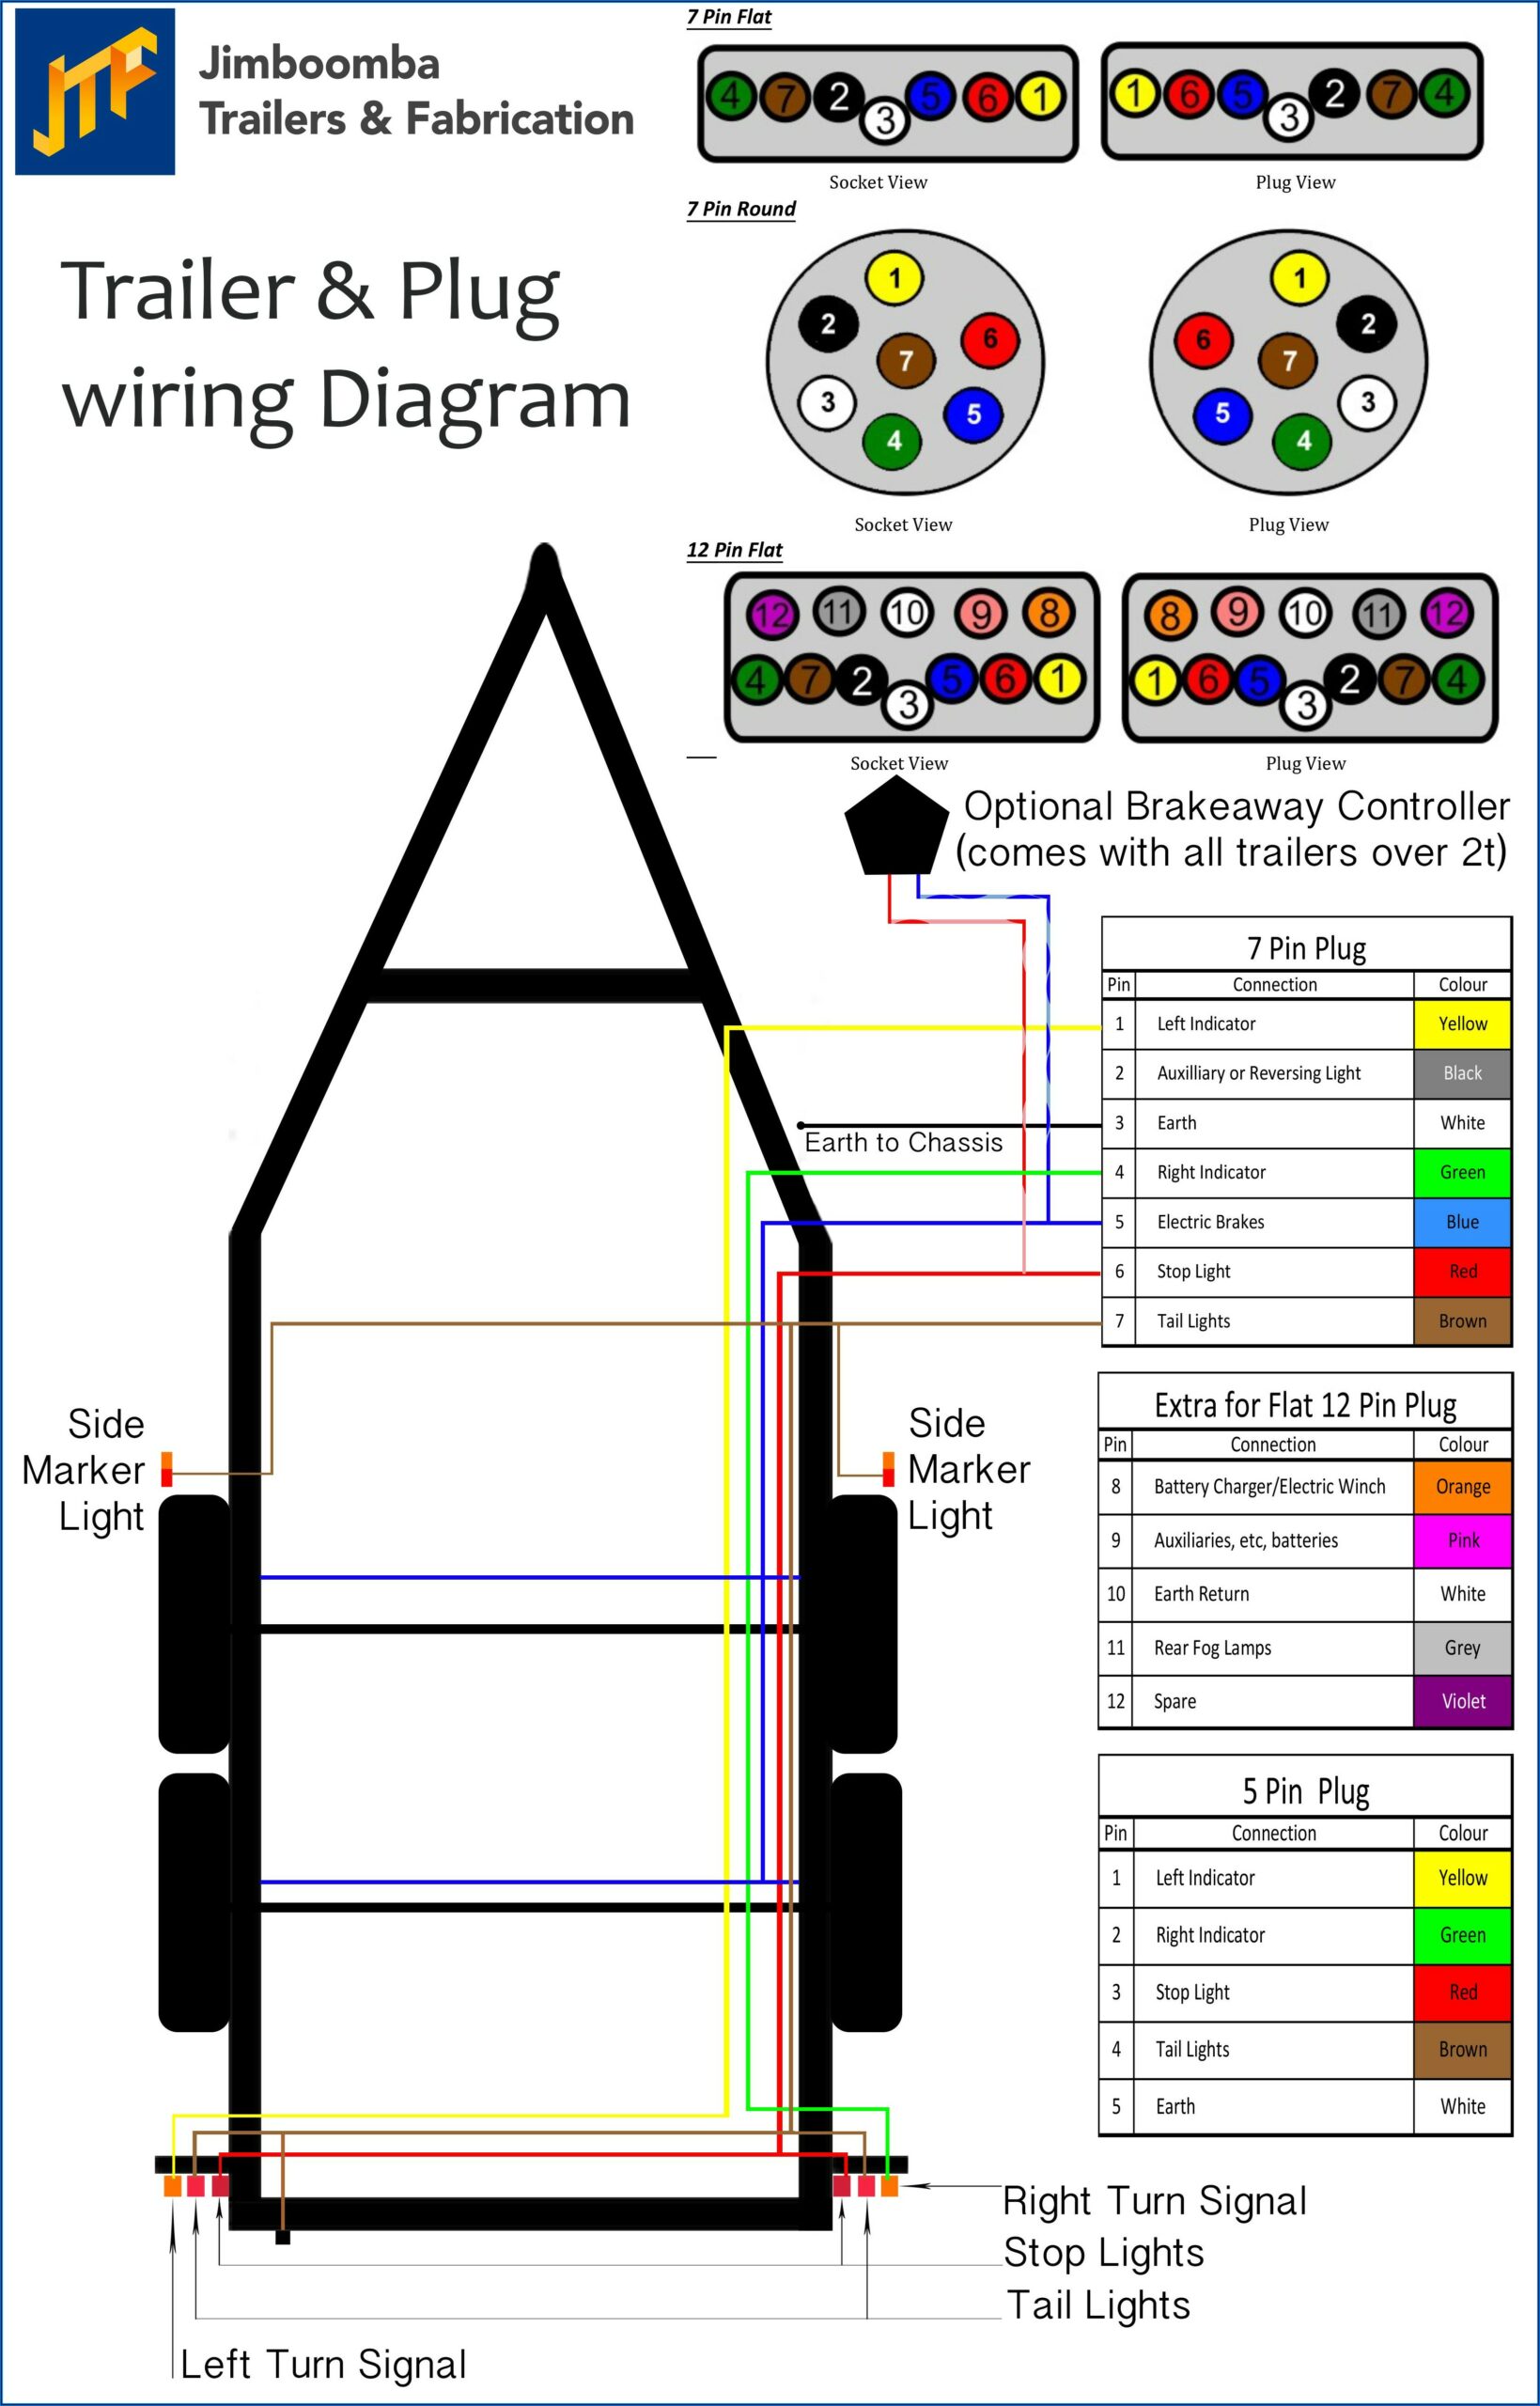 5 Pin Trailer Plug Wiring Diagram South Africa